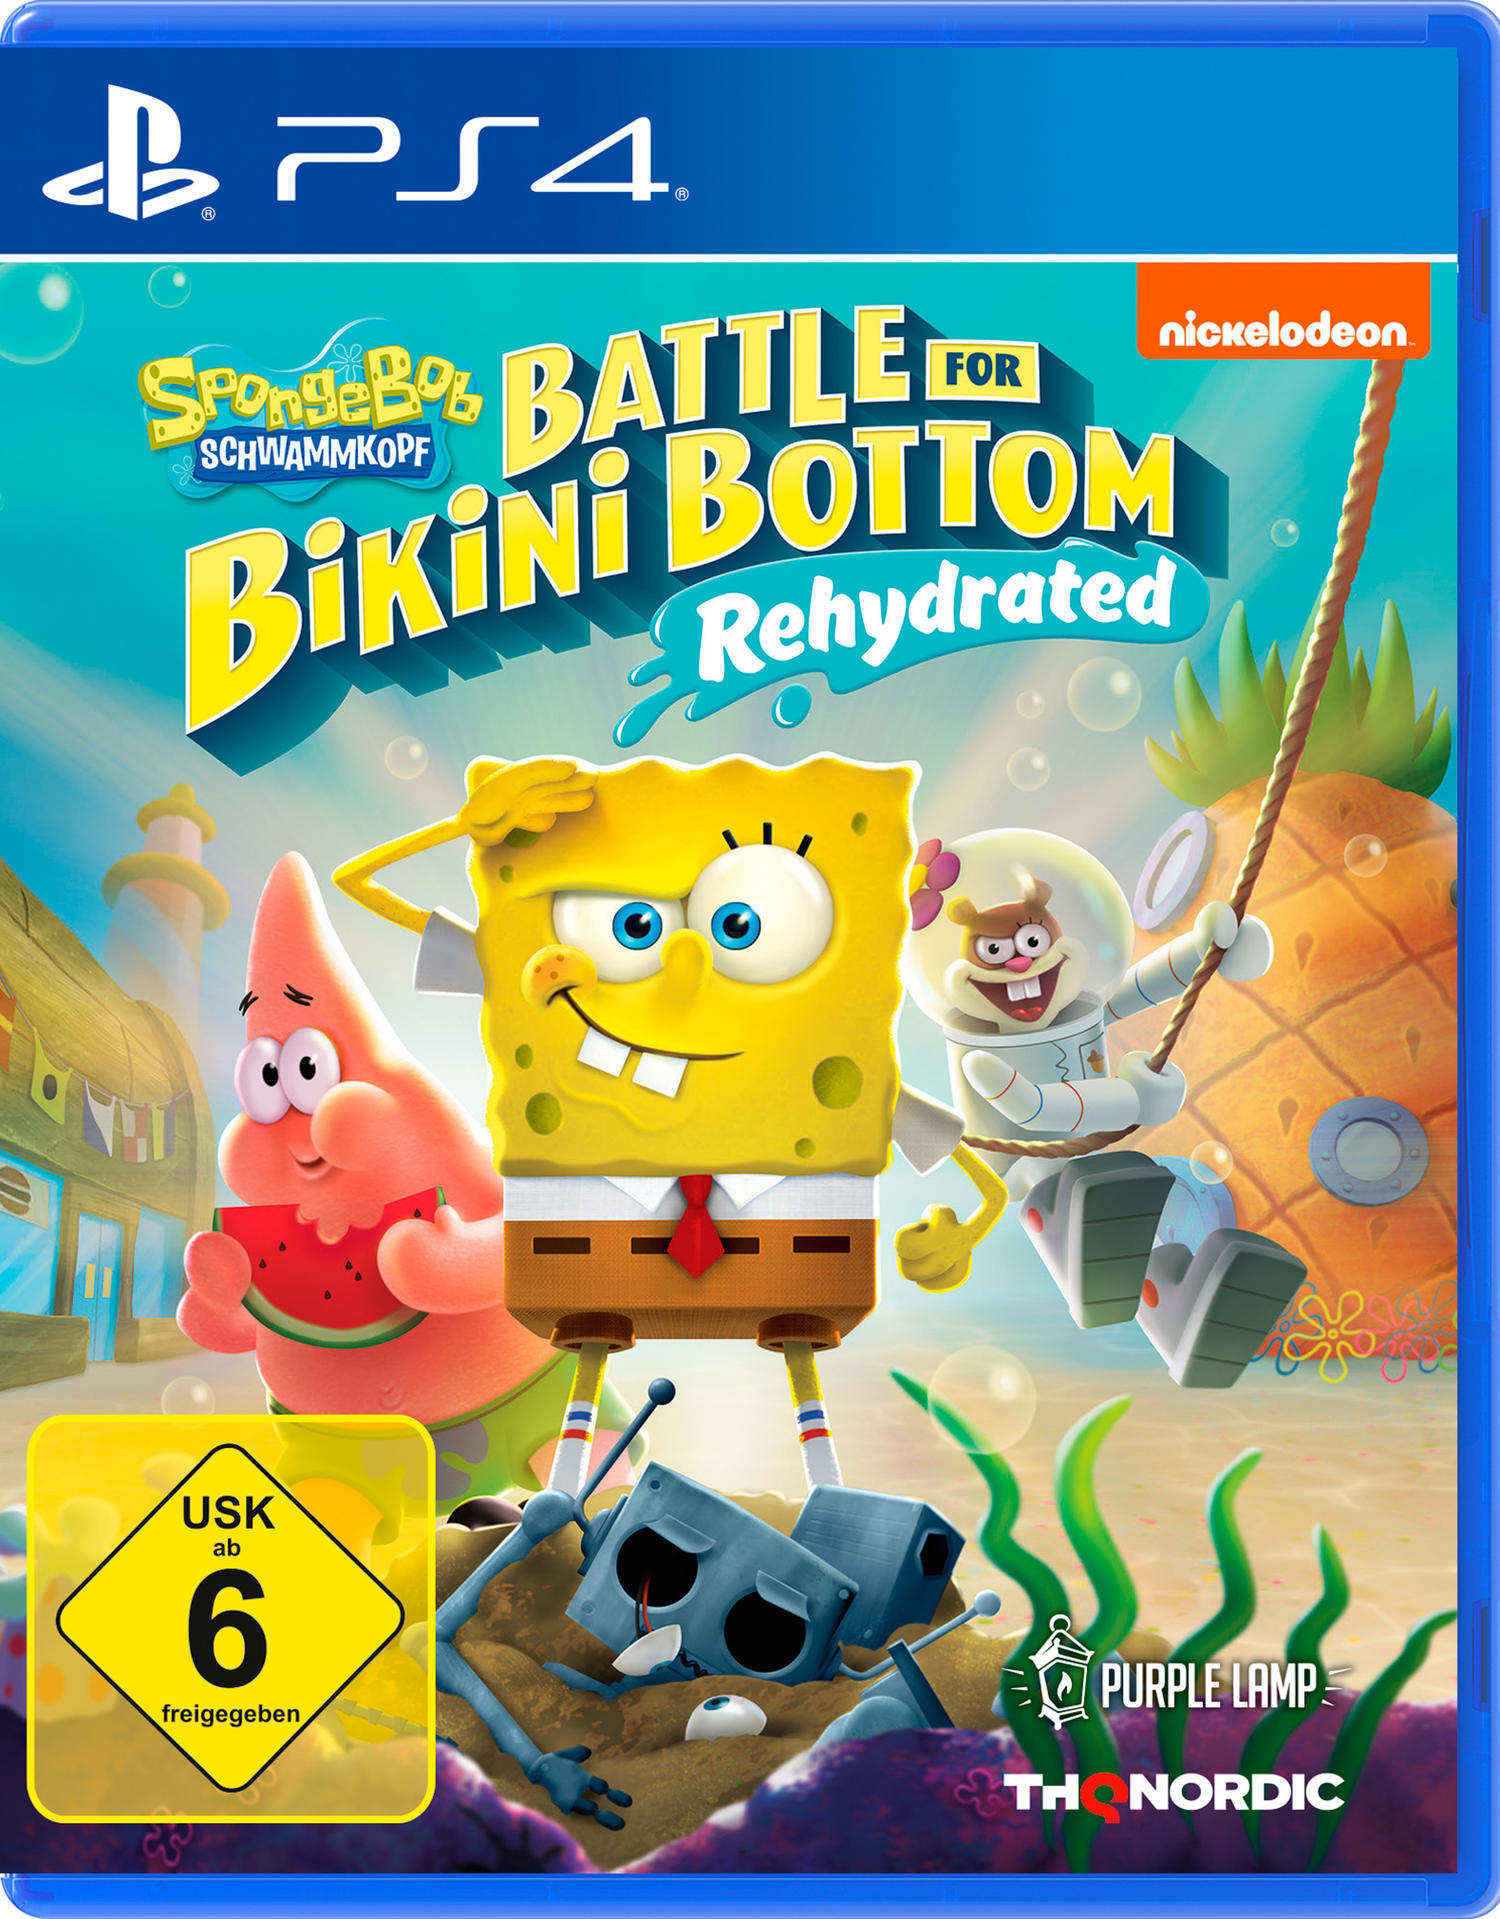 Bikini 4] SquarePants: Spongebob Rehydrated Bottom [PlayStation - Battle for -